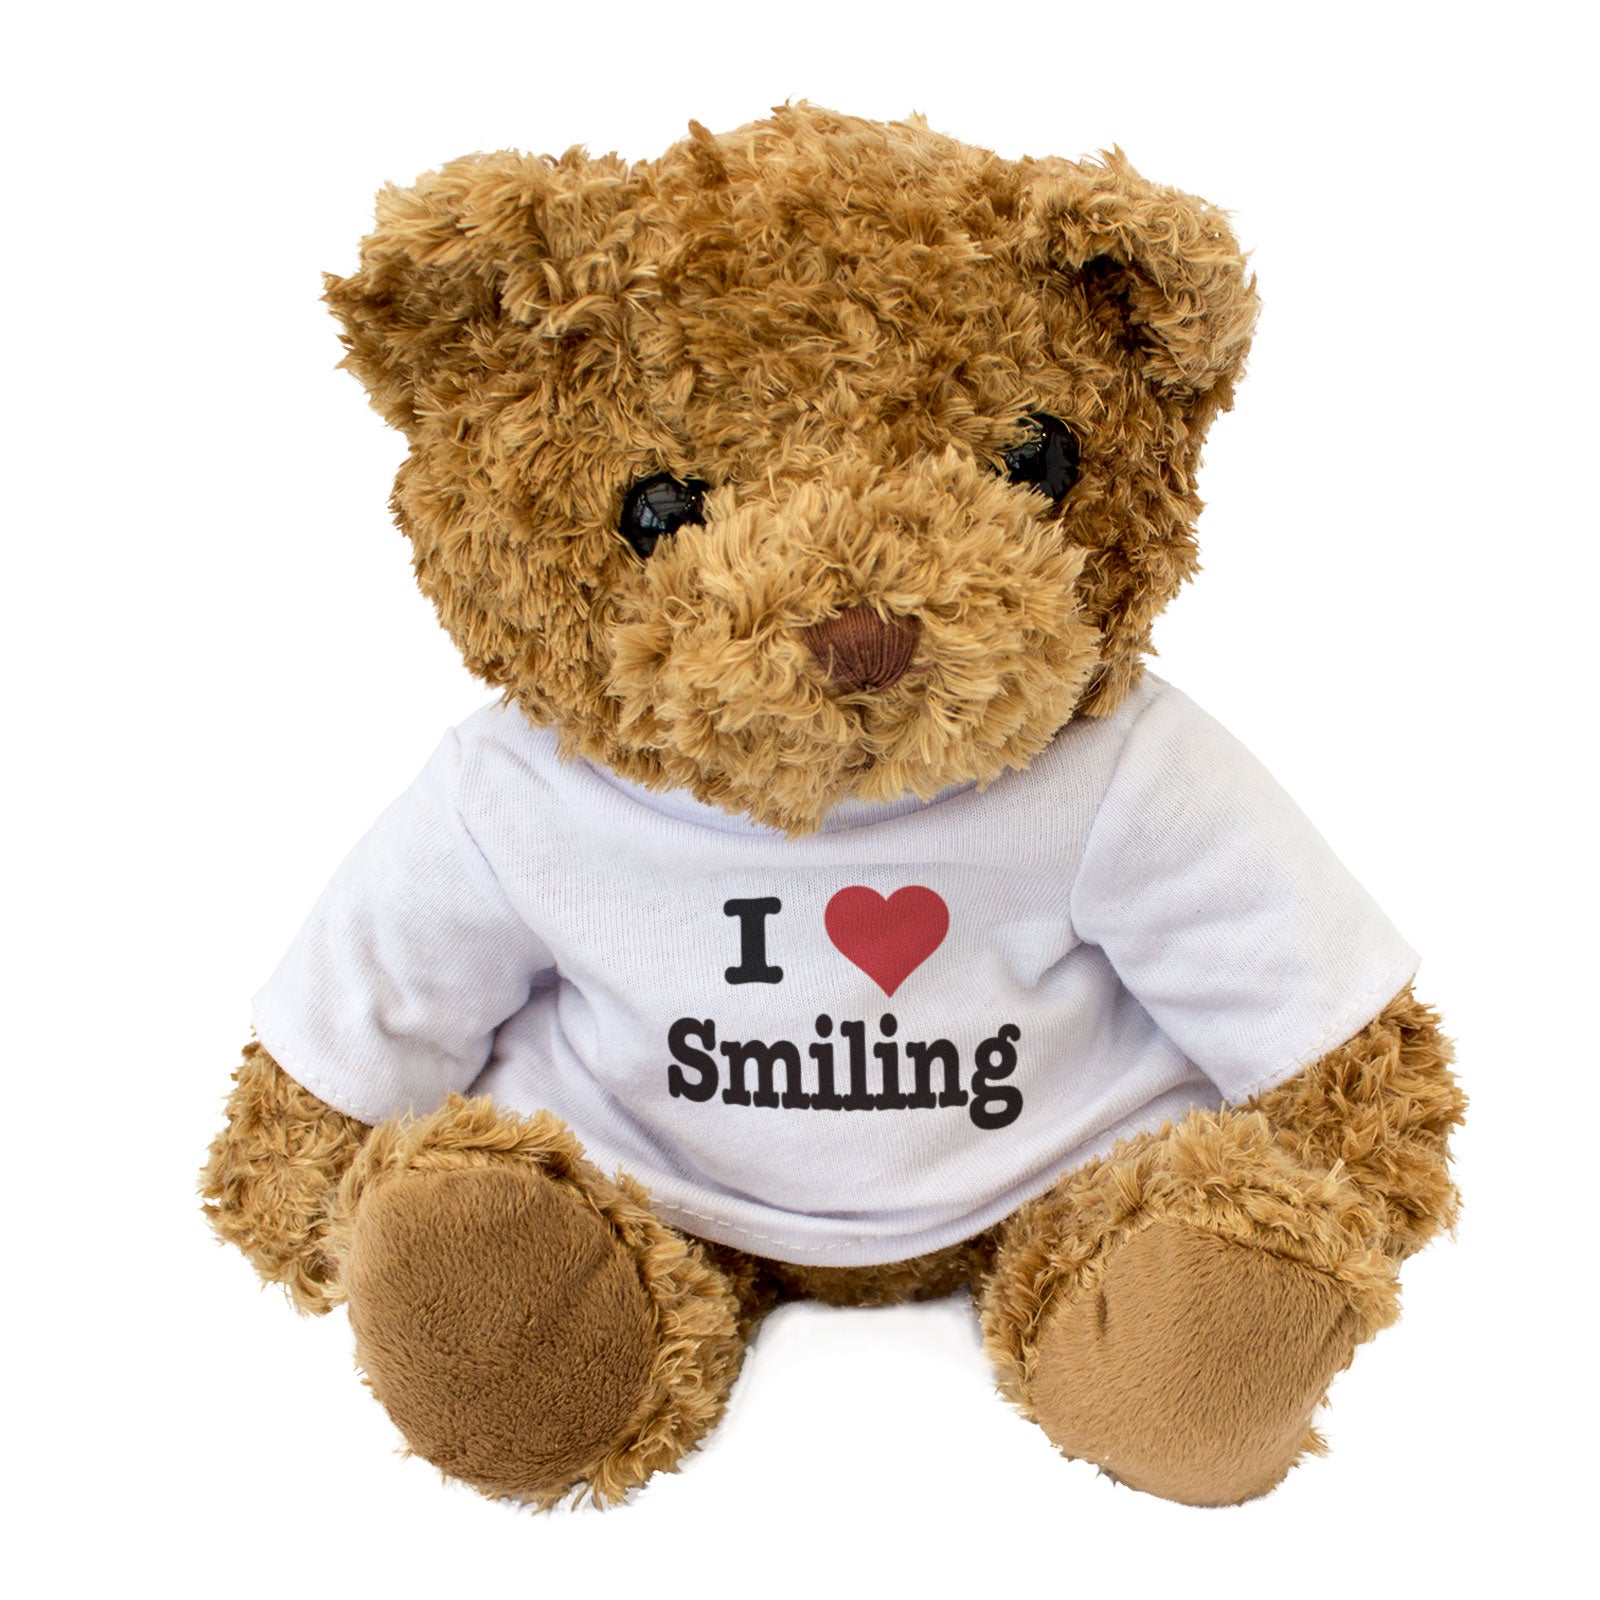 I Love Smiling - Teddy Bear